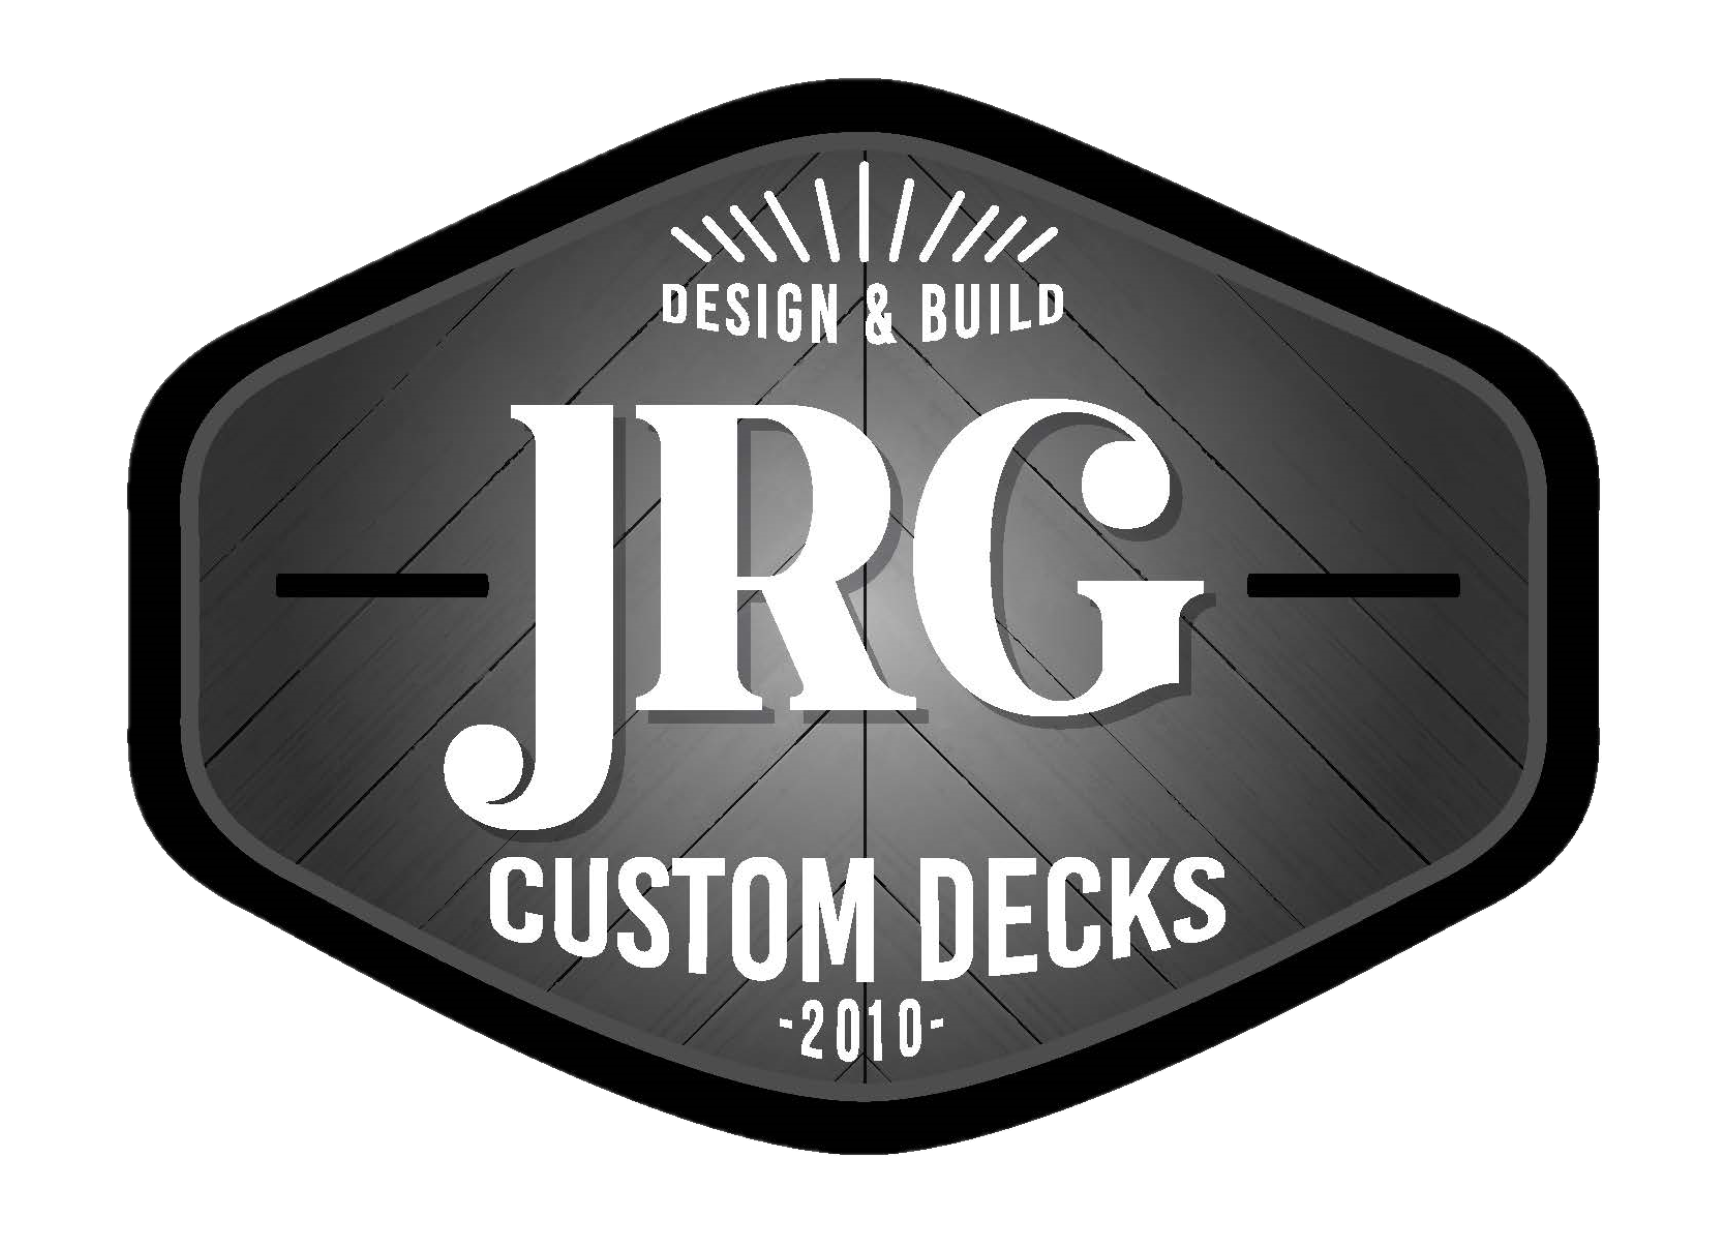 JRG Custom Decks